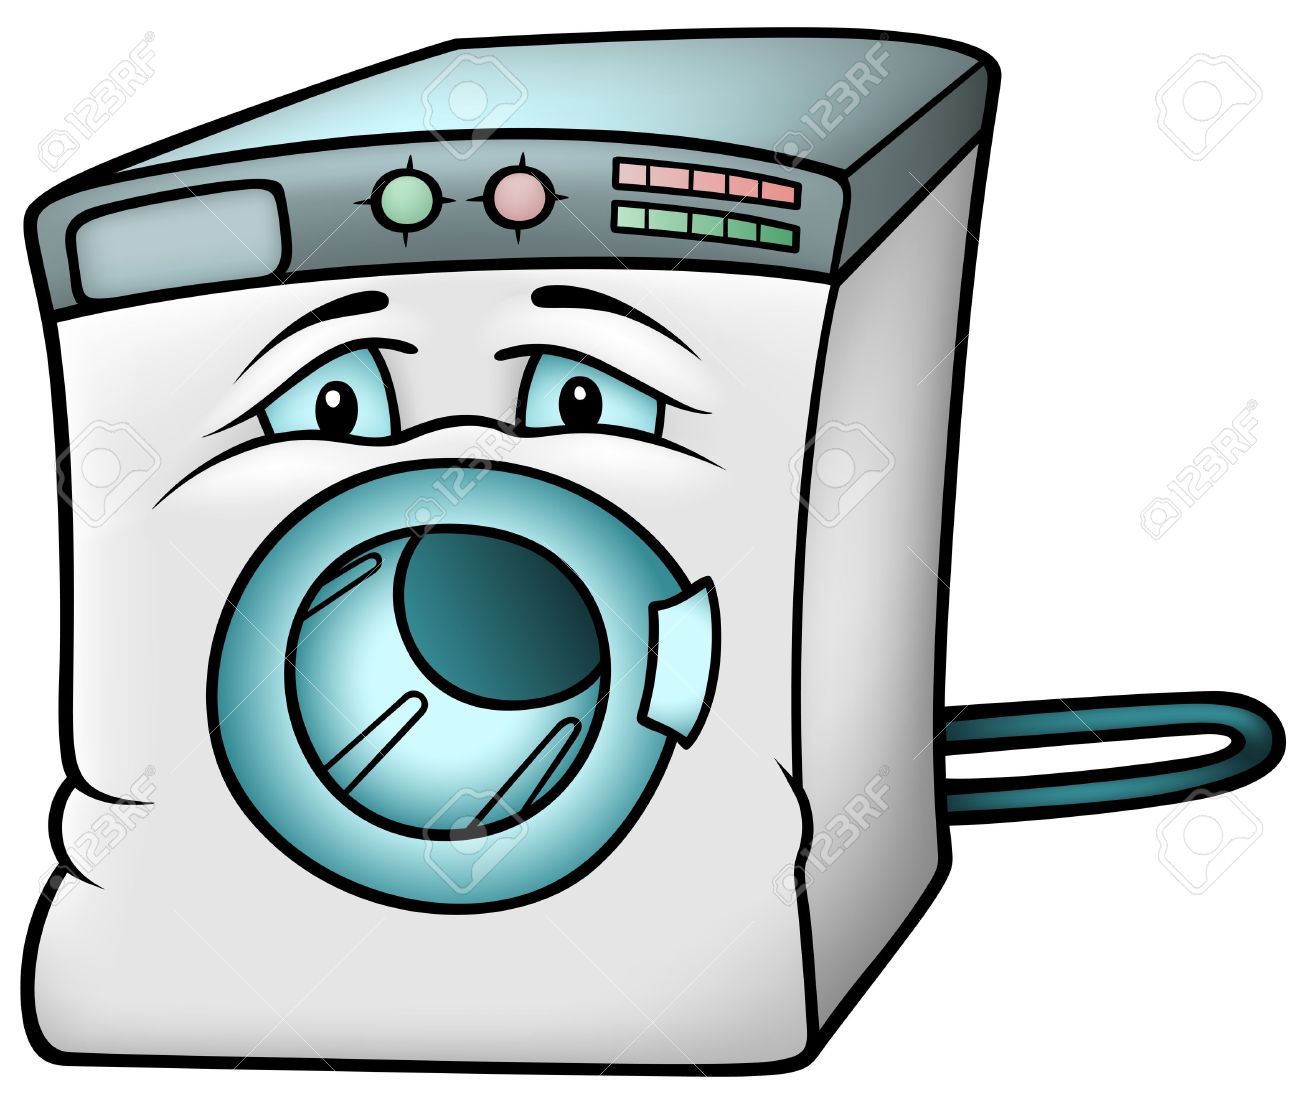 Funny Washing Machine Clipart